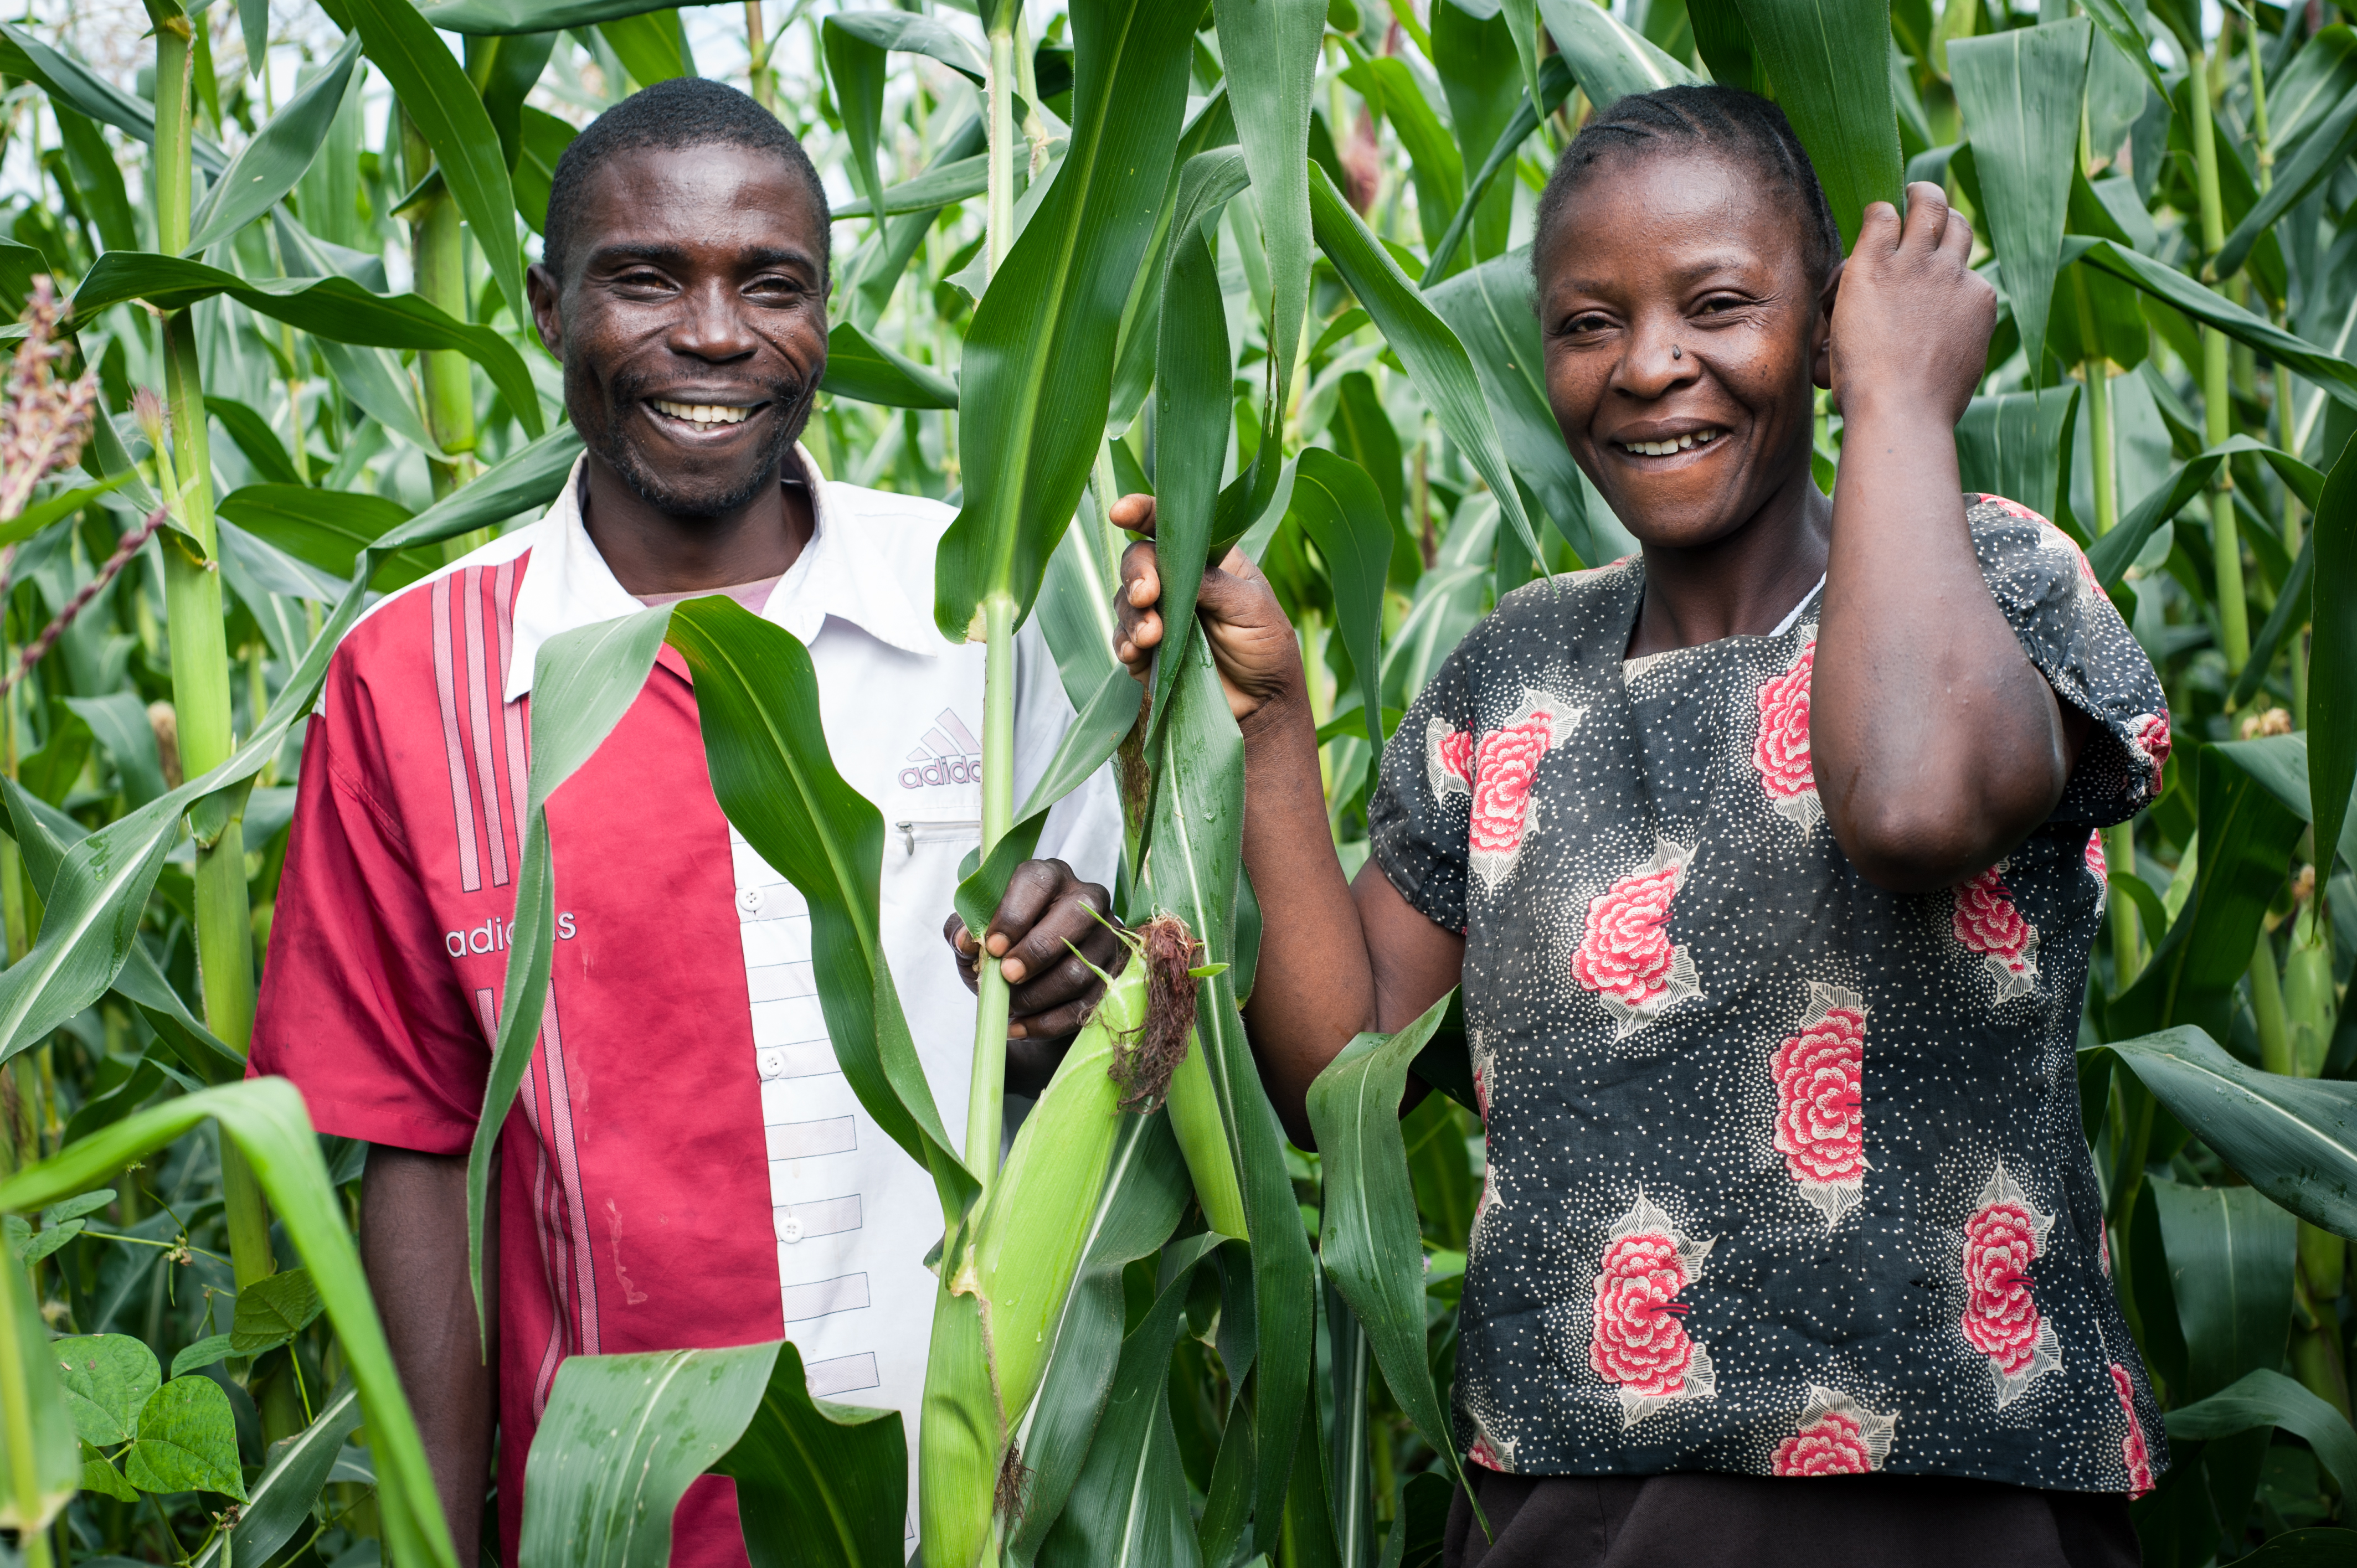 The hunger season hits Kenya as David & Zipporah wait for their harvest